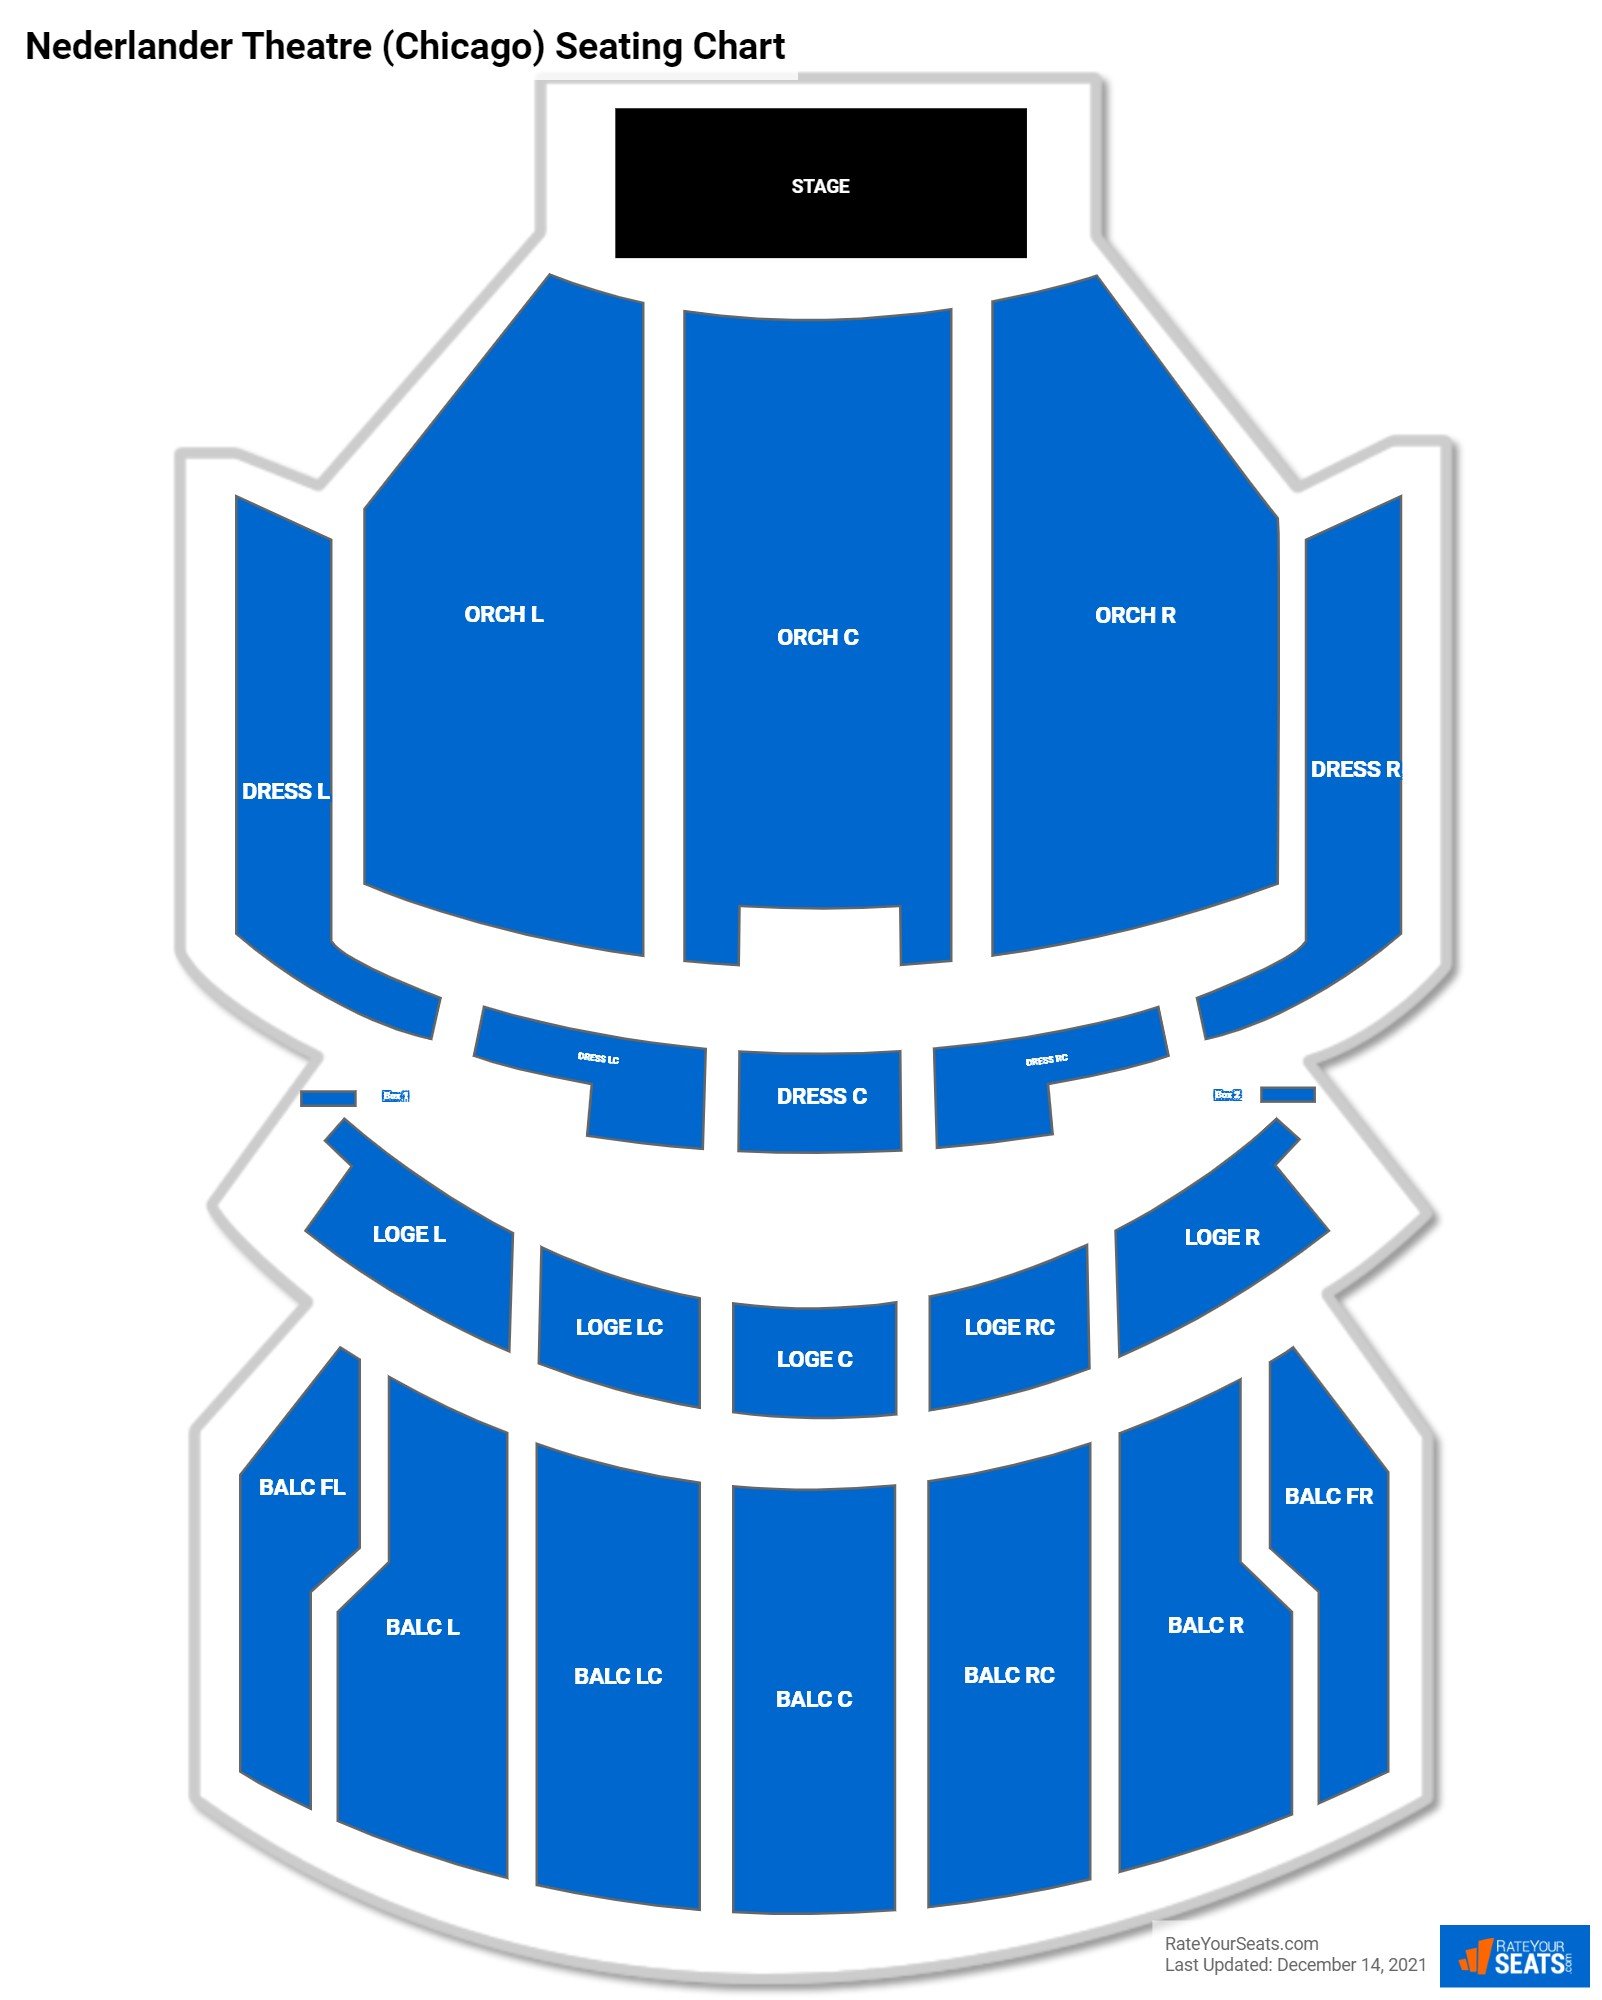 Nederlander Theatre (Chicago) Theater Seating Chart